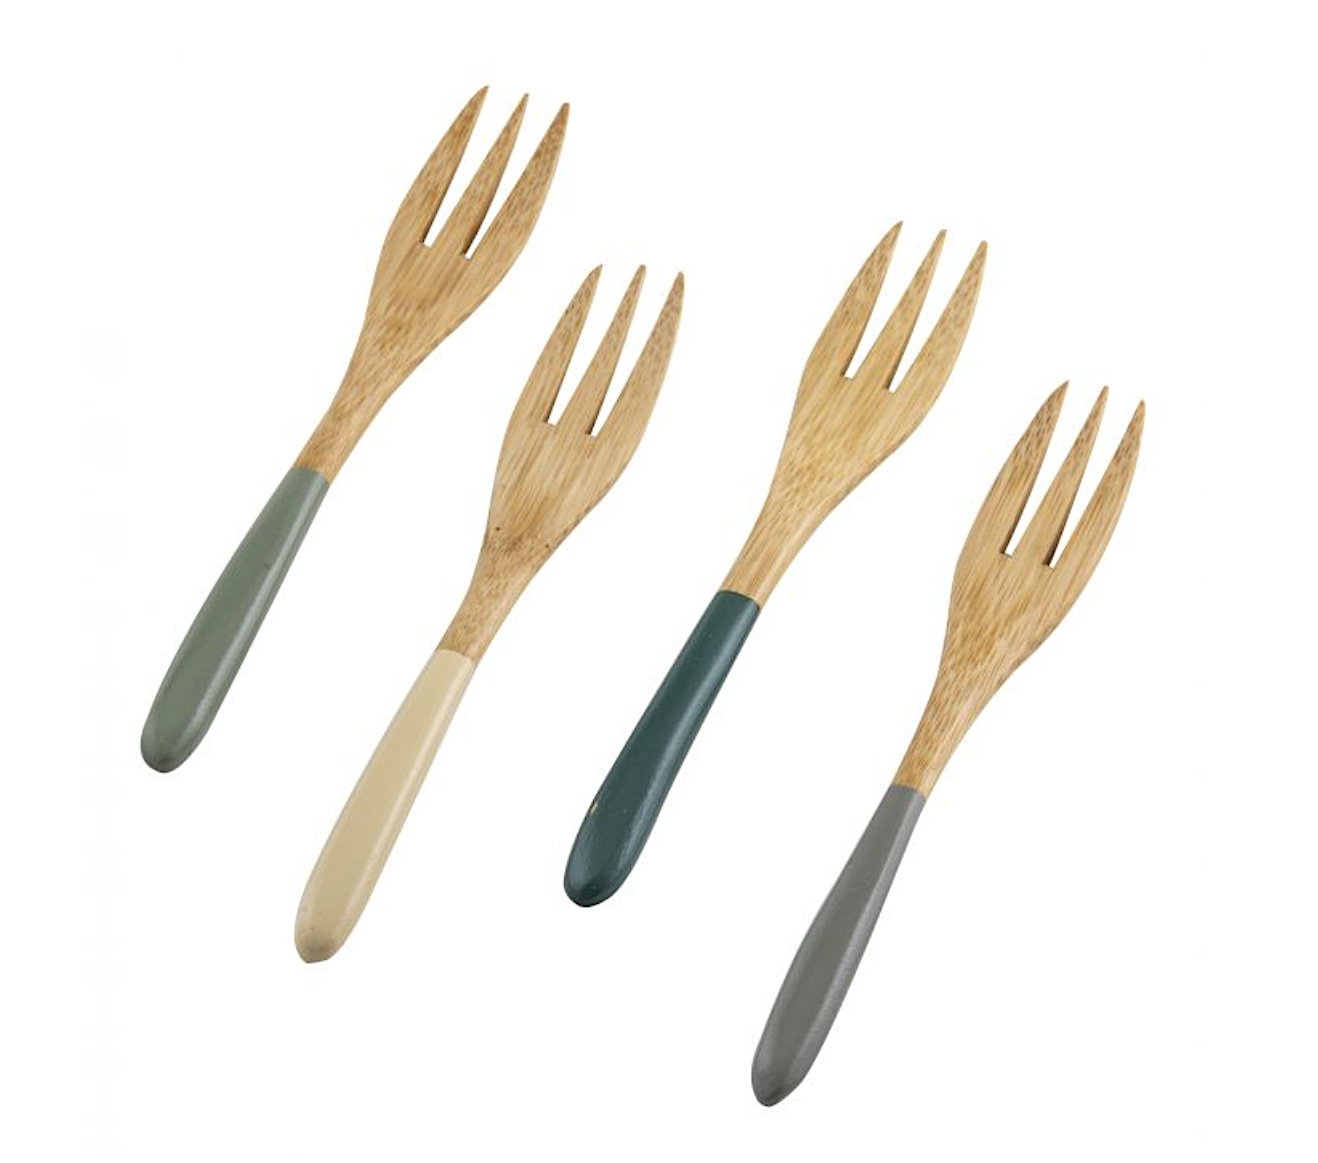 4 Bamboo Forks